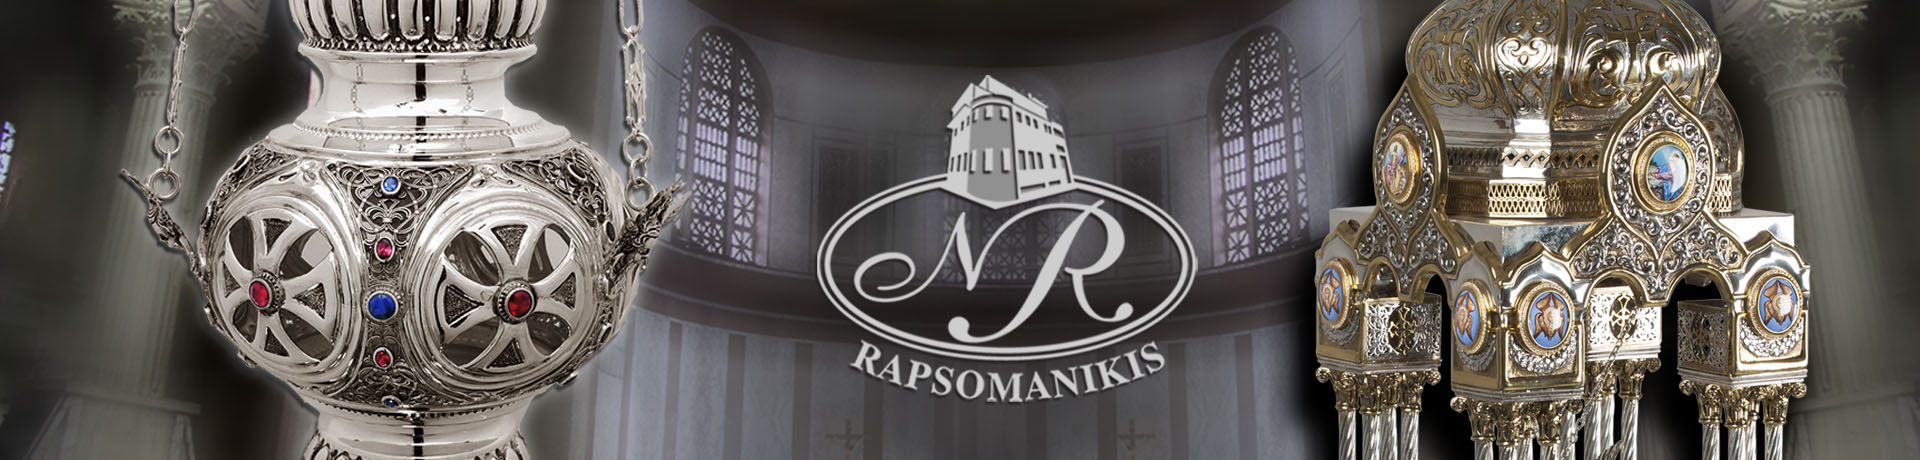 Rapsomanikis Center Banner01